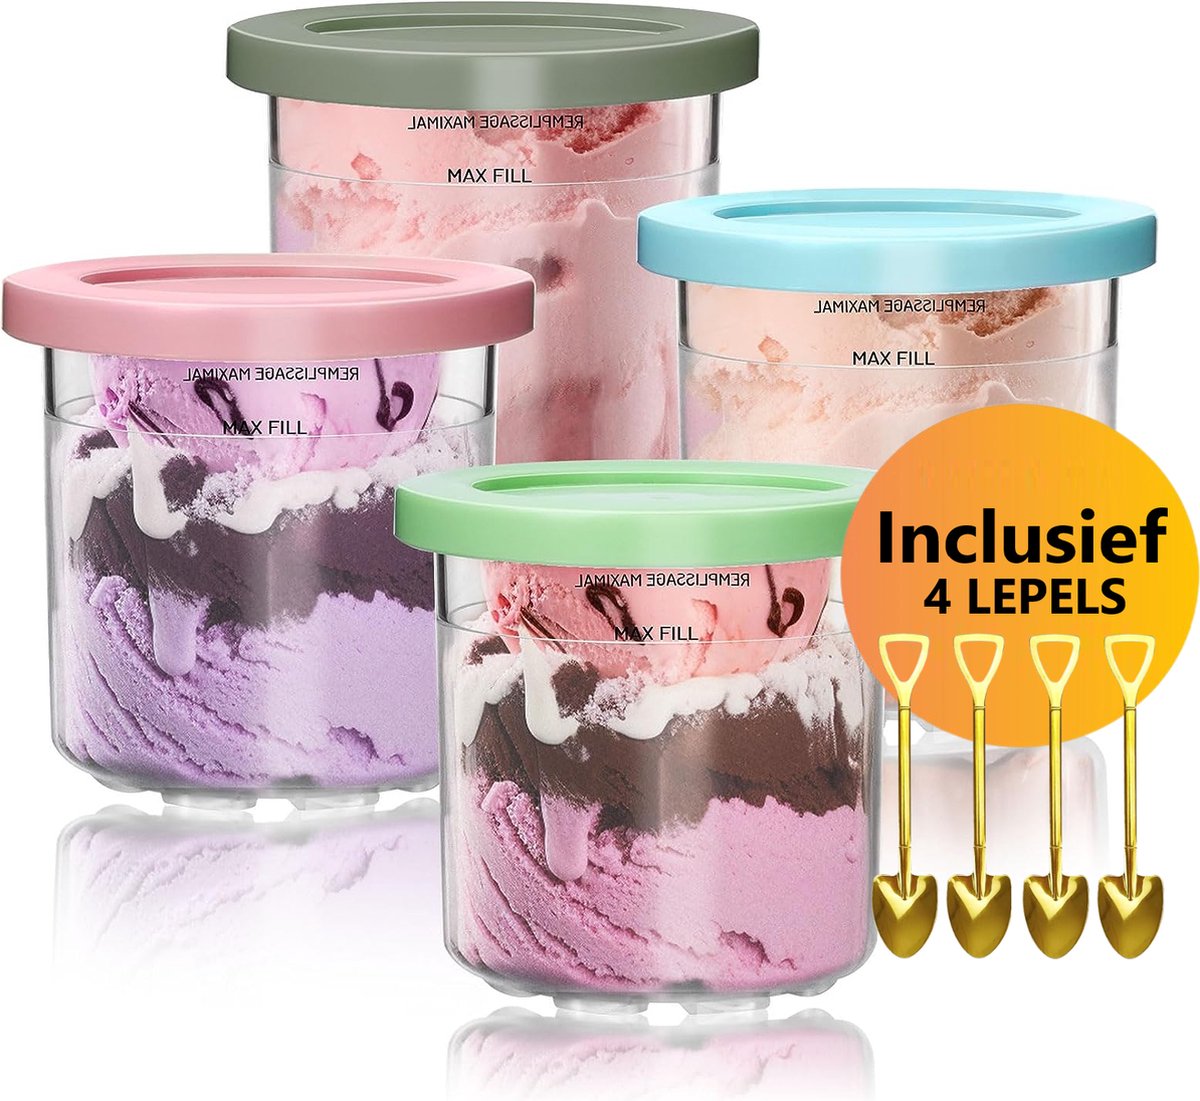 Contenants de crème glacée, compatibles avec la glace Ninja Creami